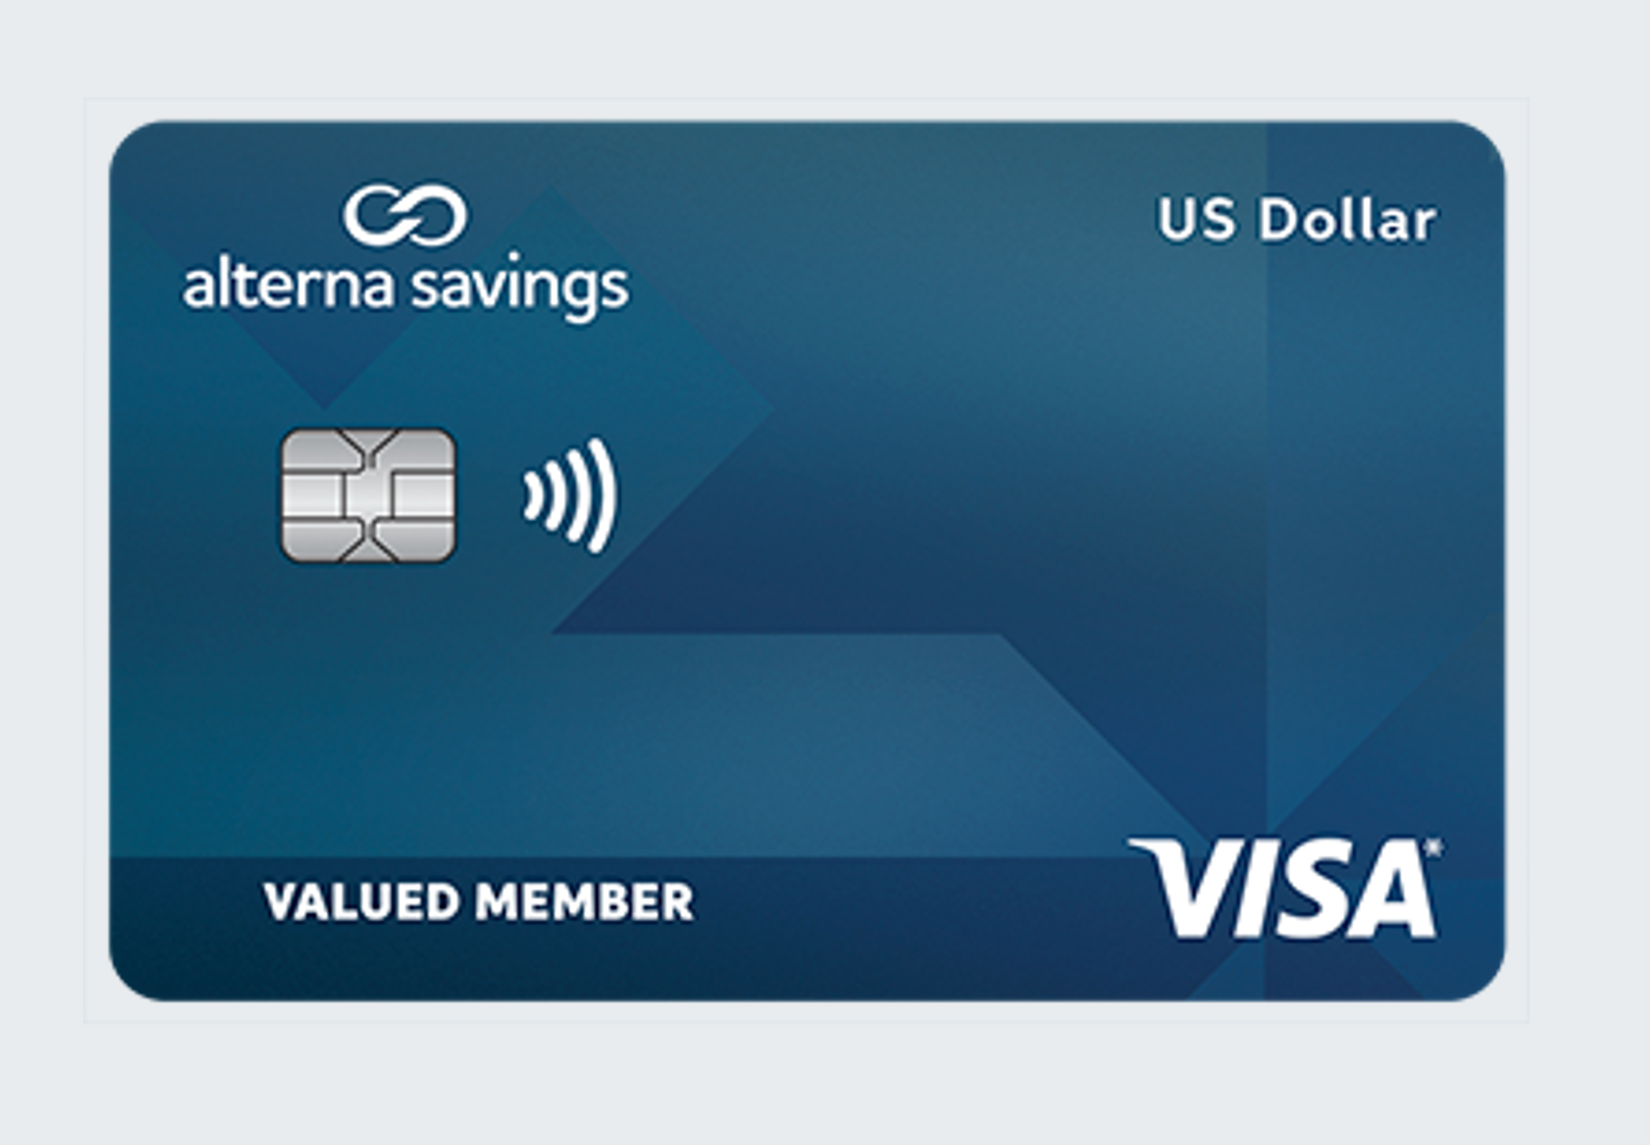 US dollar credit card image